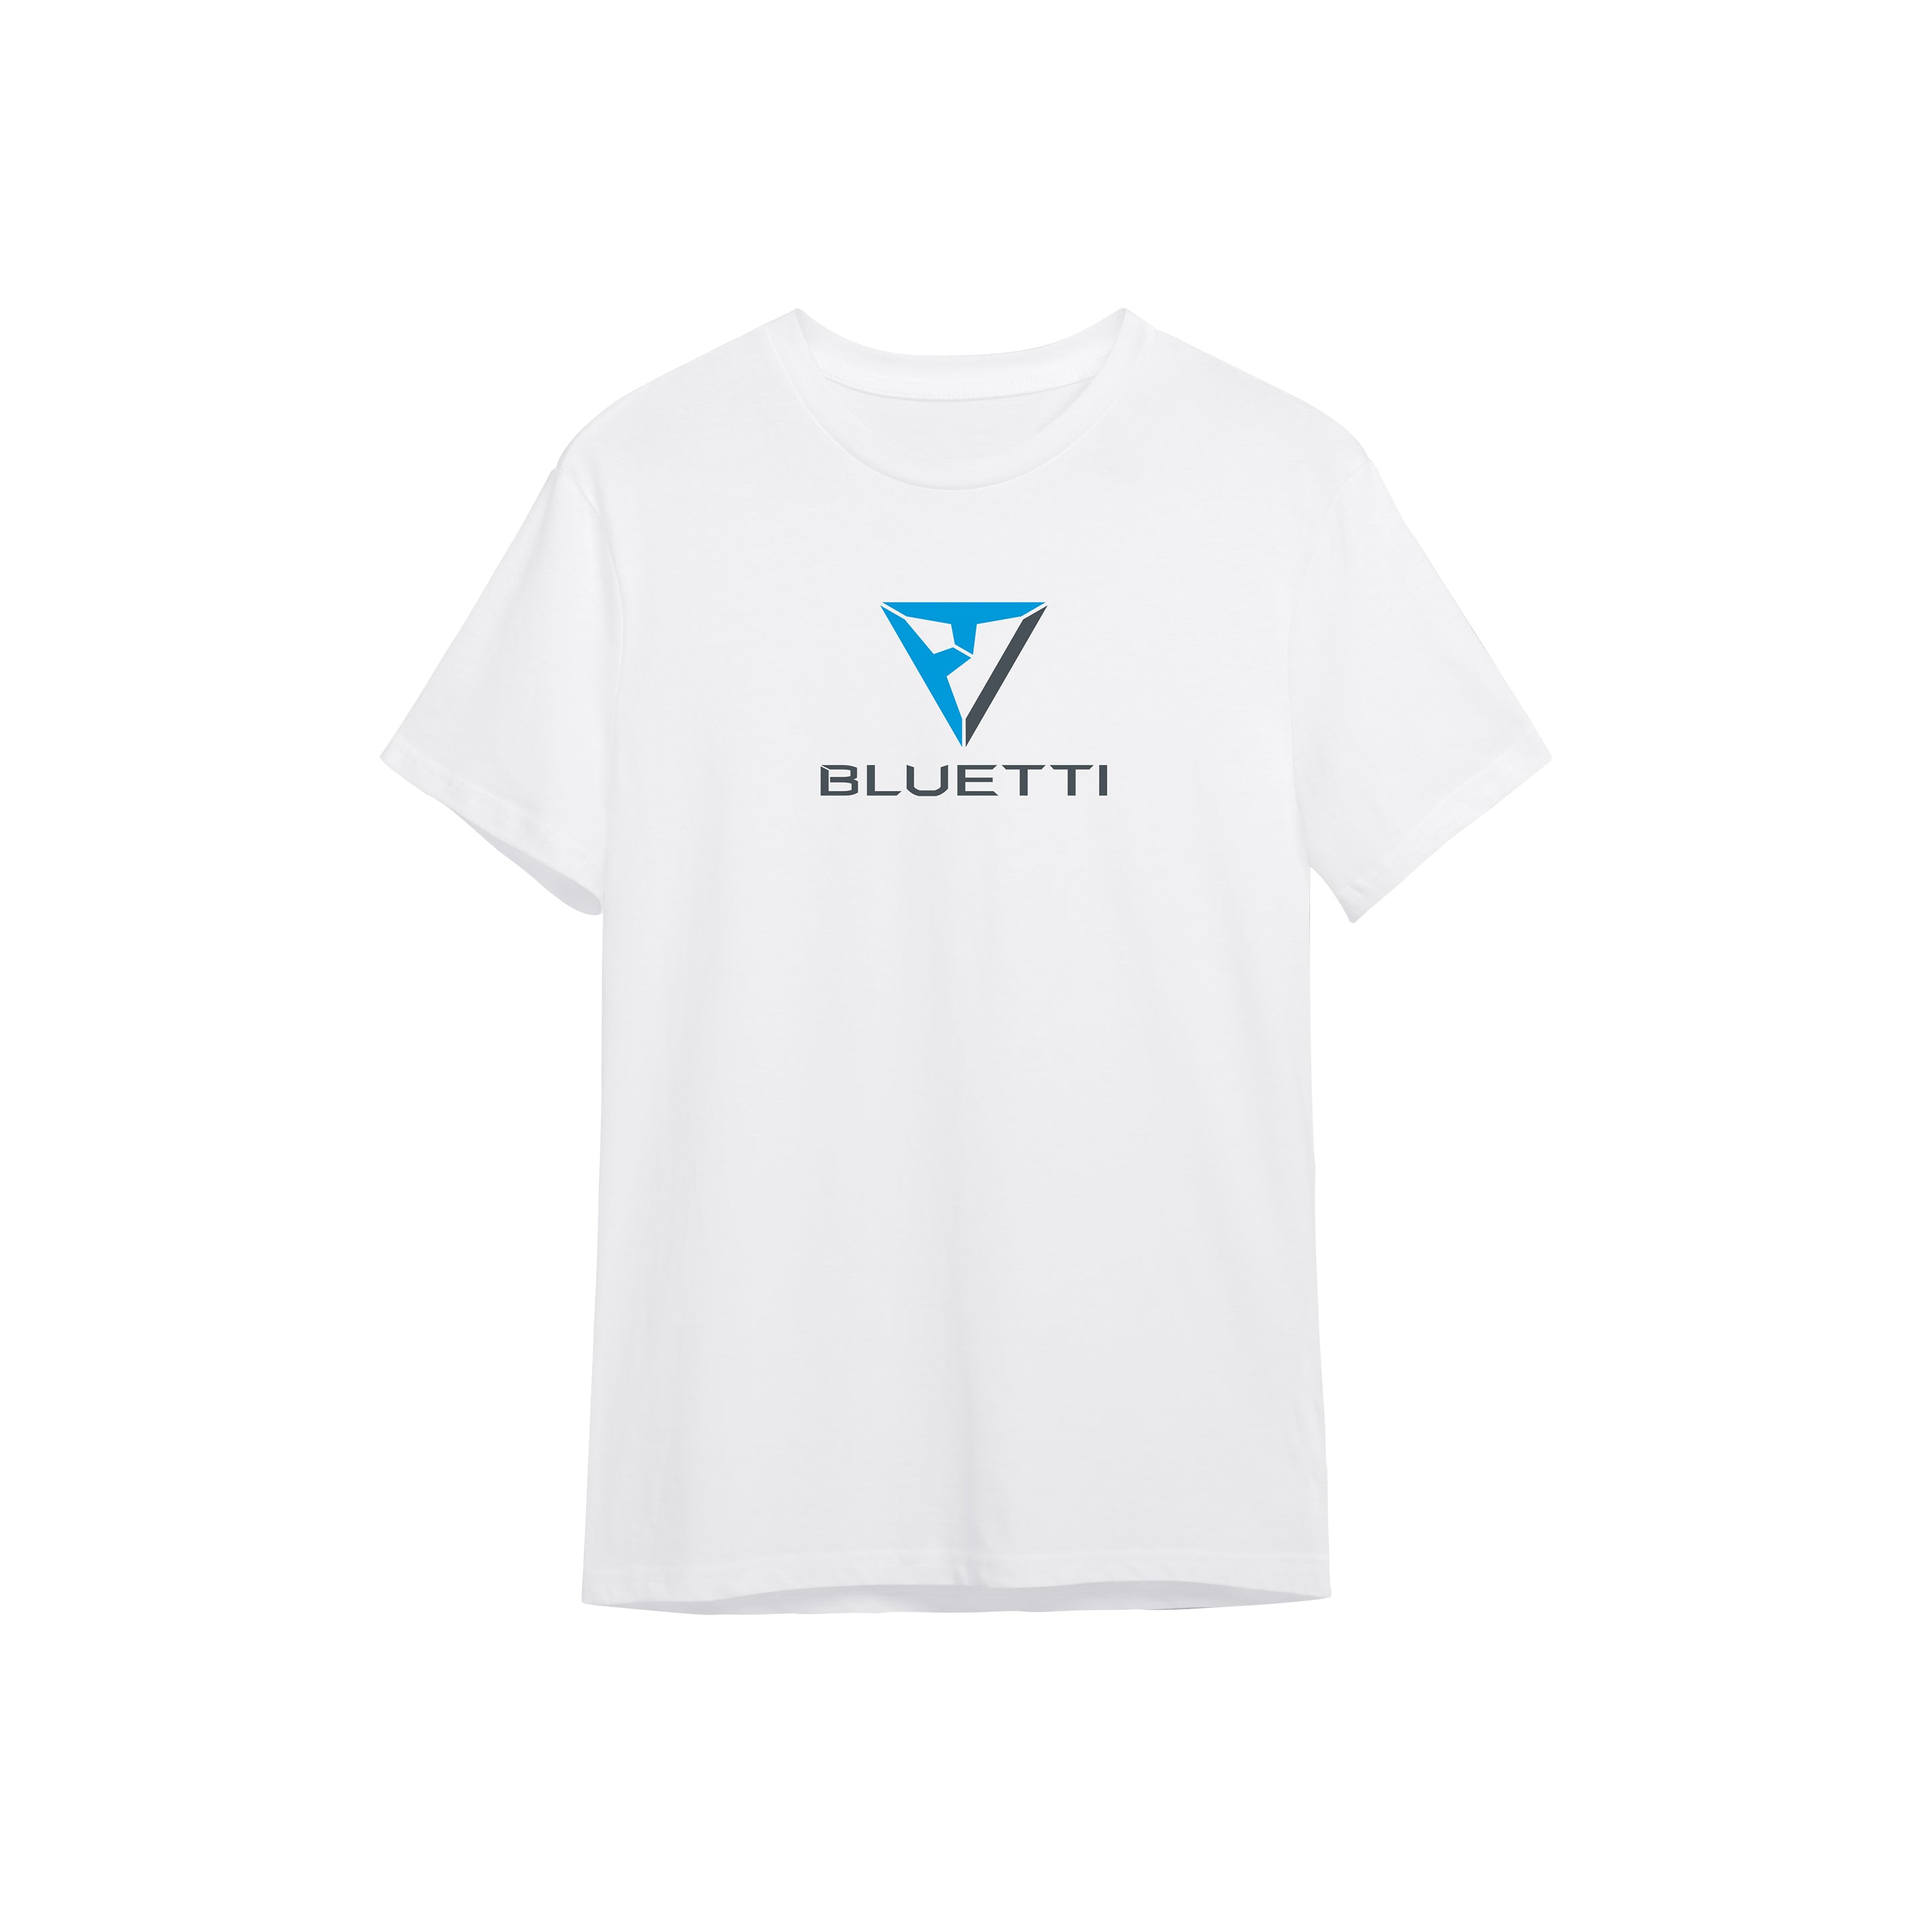 BLUETTI T-shirt, S / white